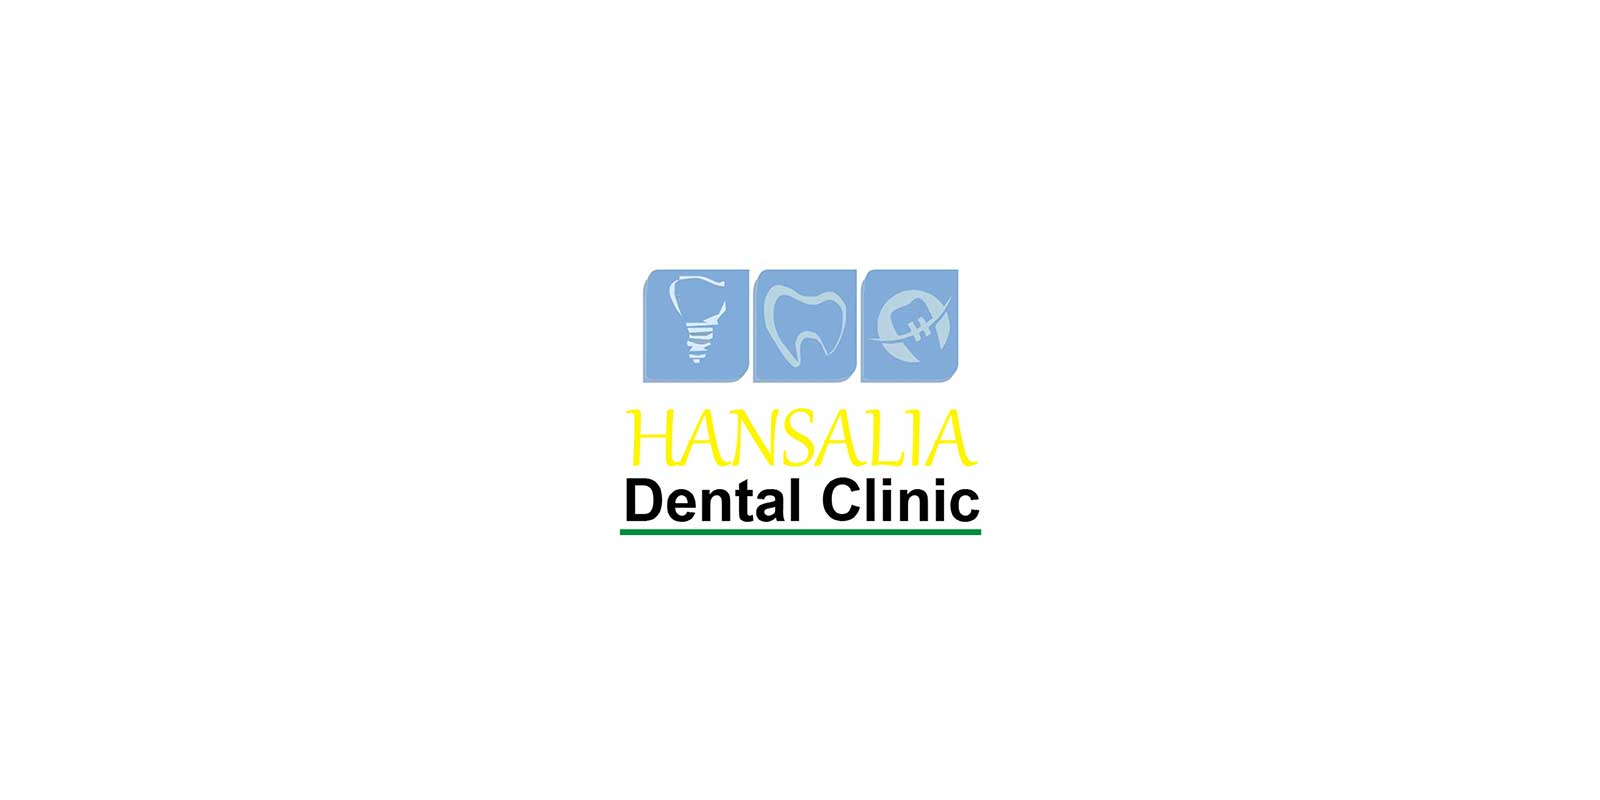 Harshalia Dental Clinic